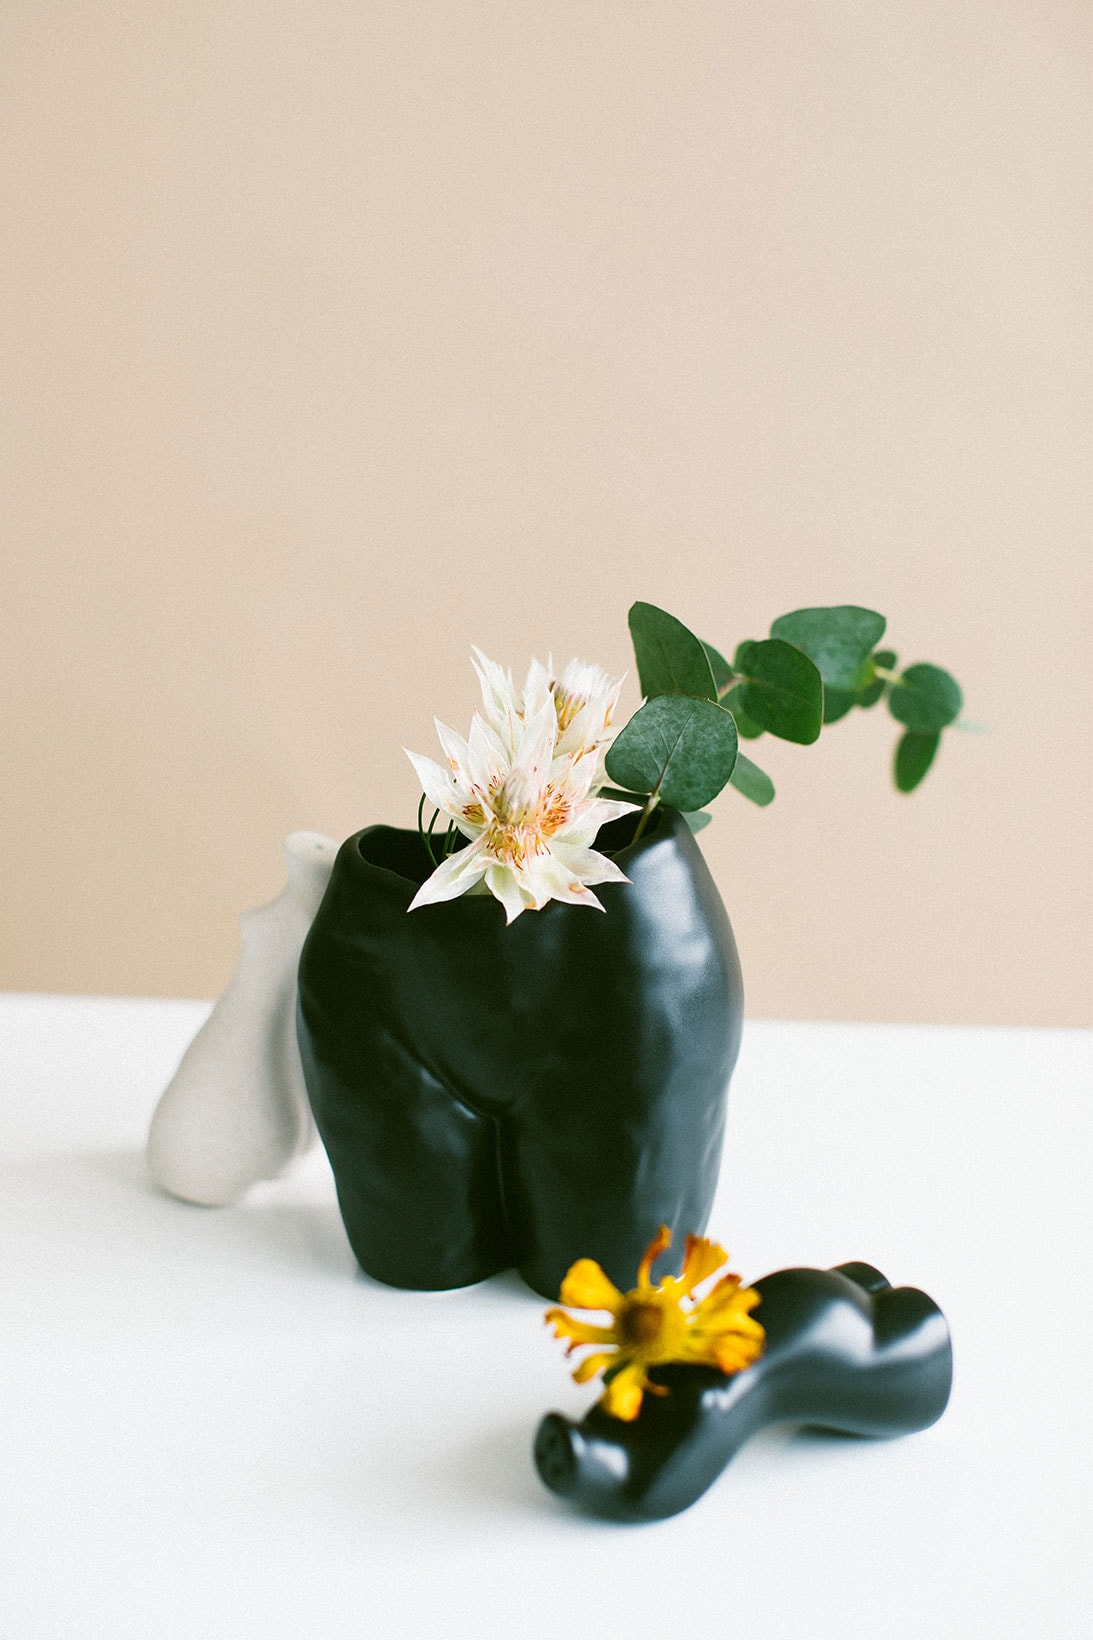 anissa kermiche vases salt pepper shakers jewelry accessories homeware decor